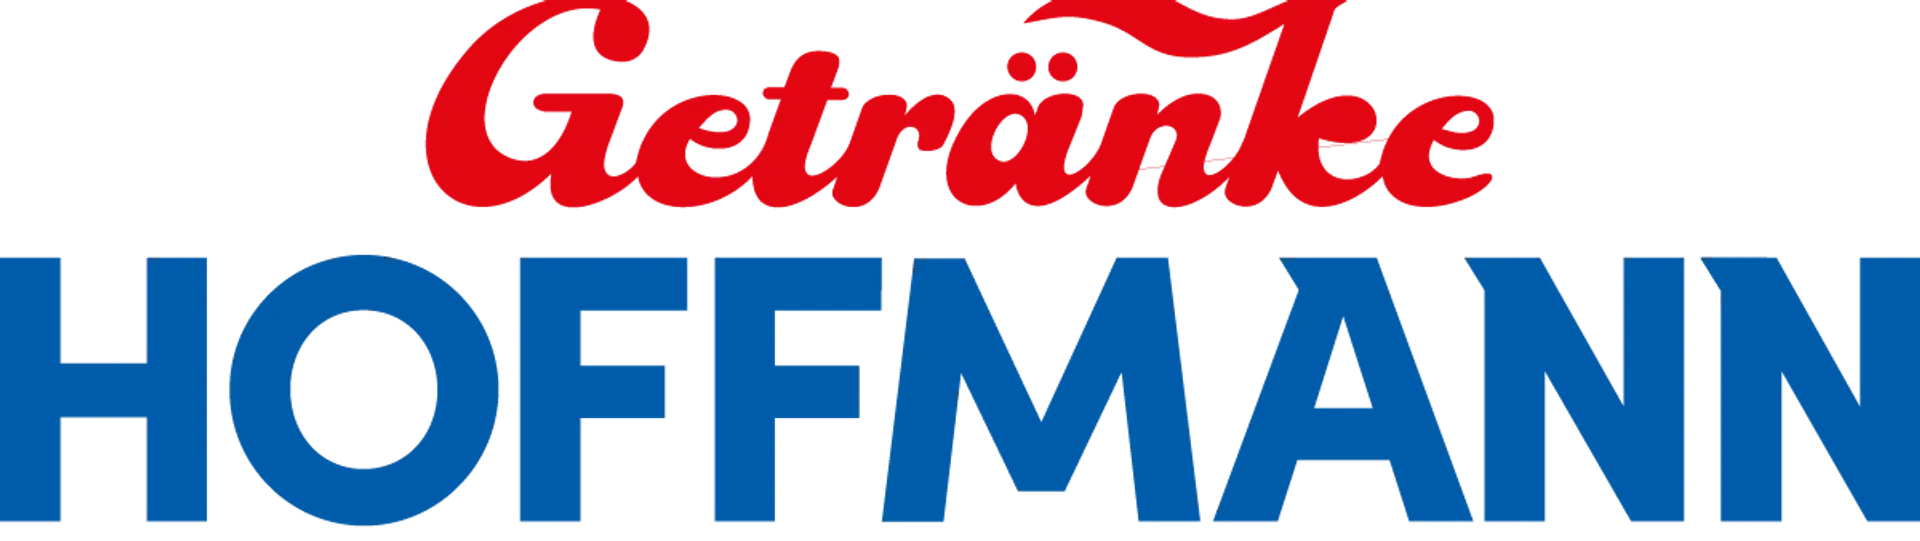 GETRÄNKE HOFFMANN logo die aktuell Flugblatt